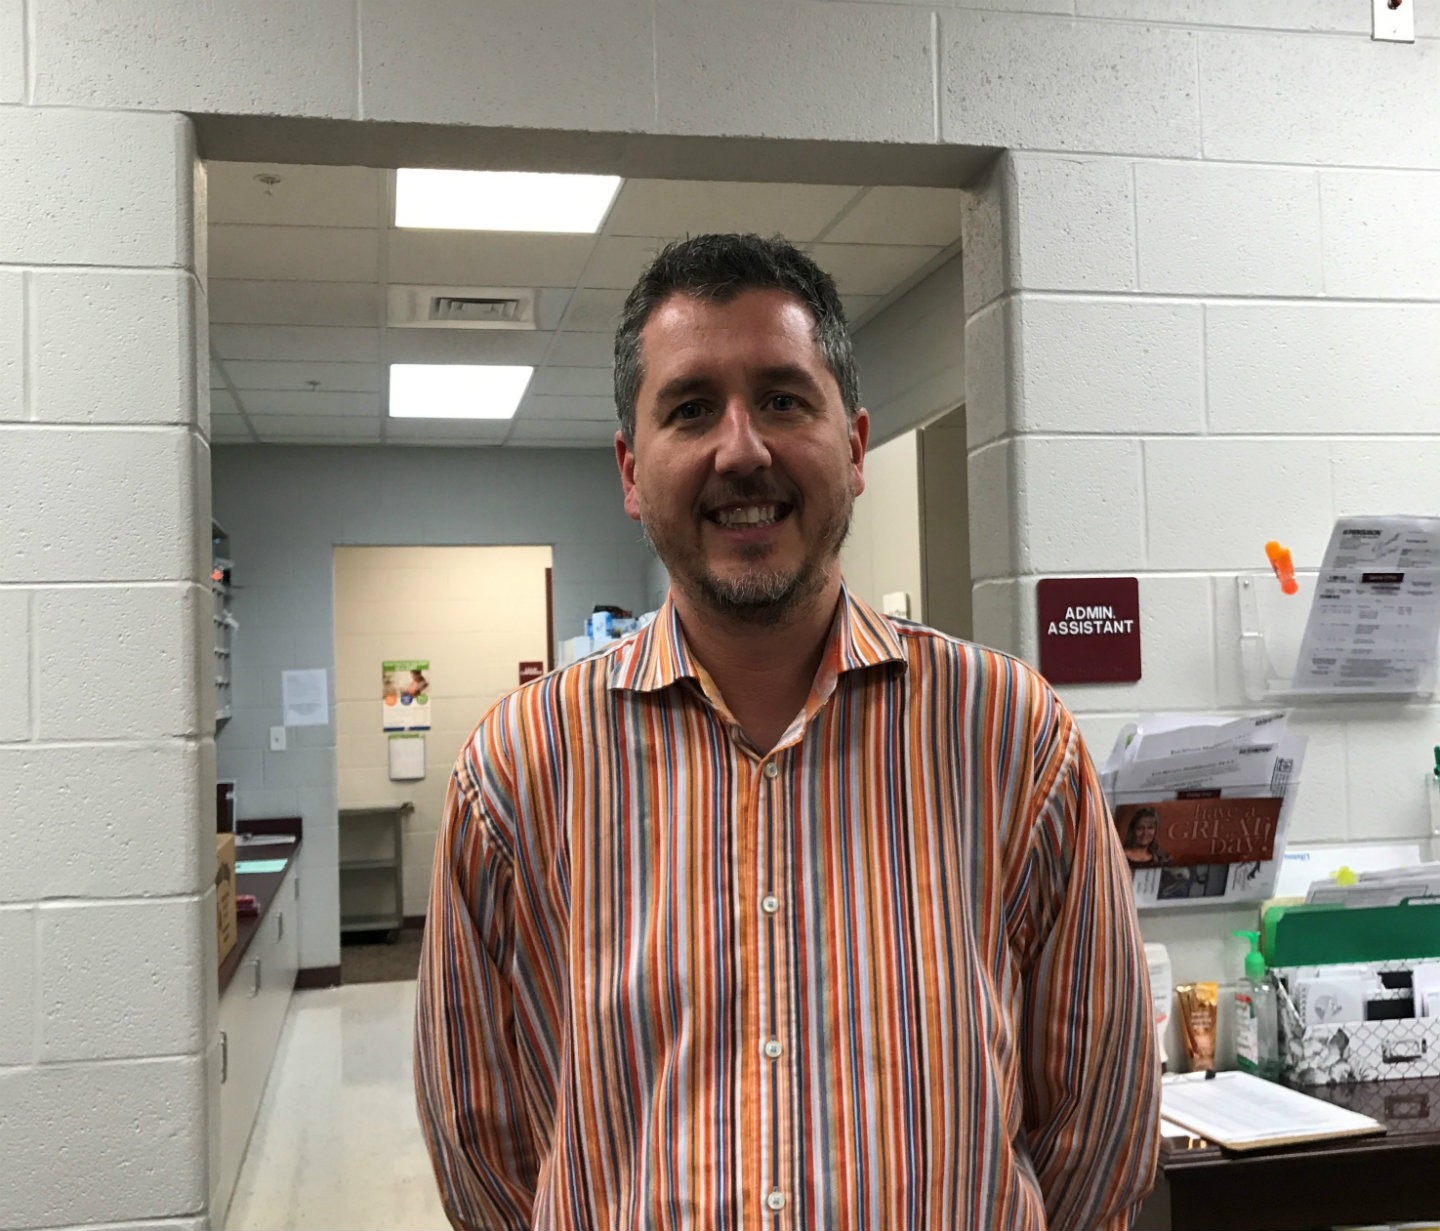 Teacher Joe Moneymaker stands in a doorway at his school. He wears a vertical-striped orange and purple button down shirt.